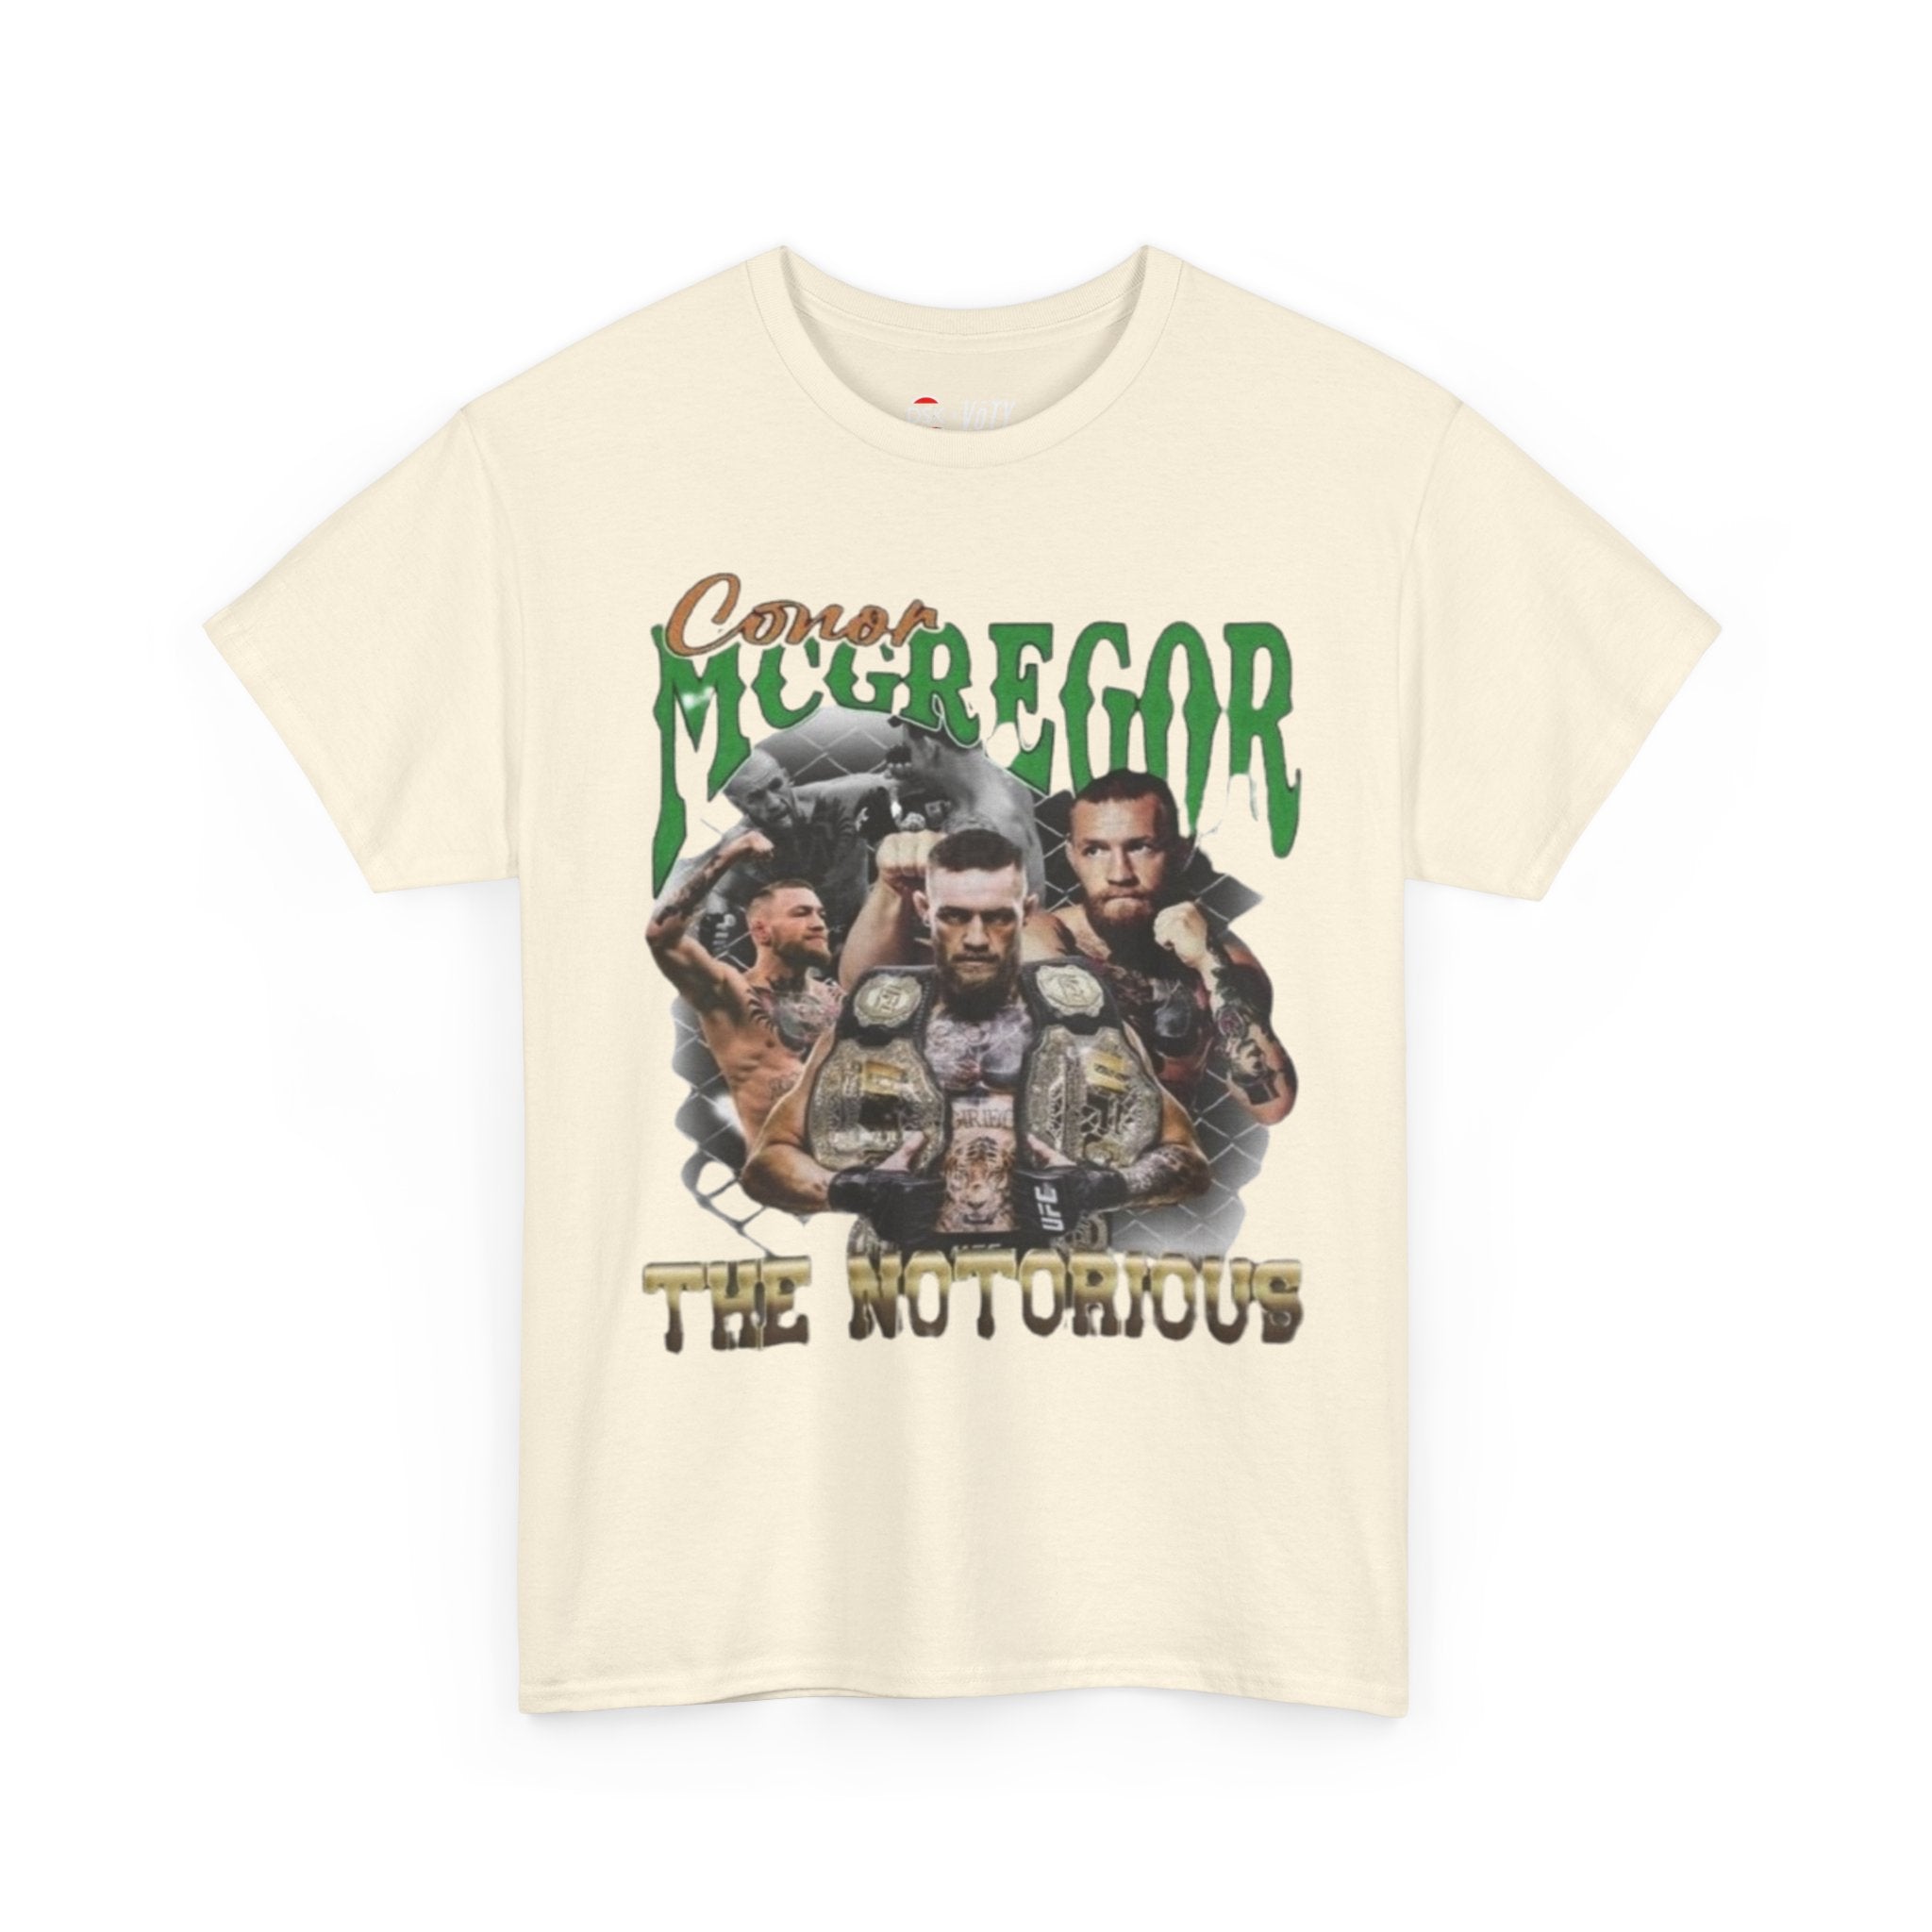 Conor Mcgregor T-shirt